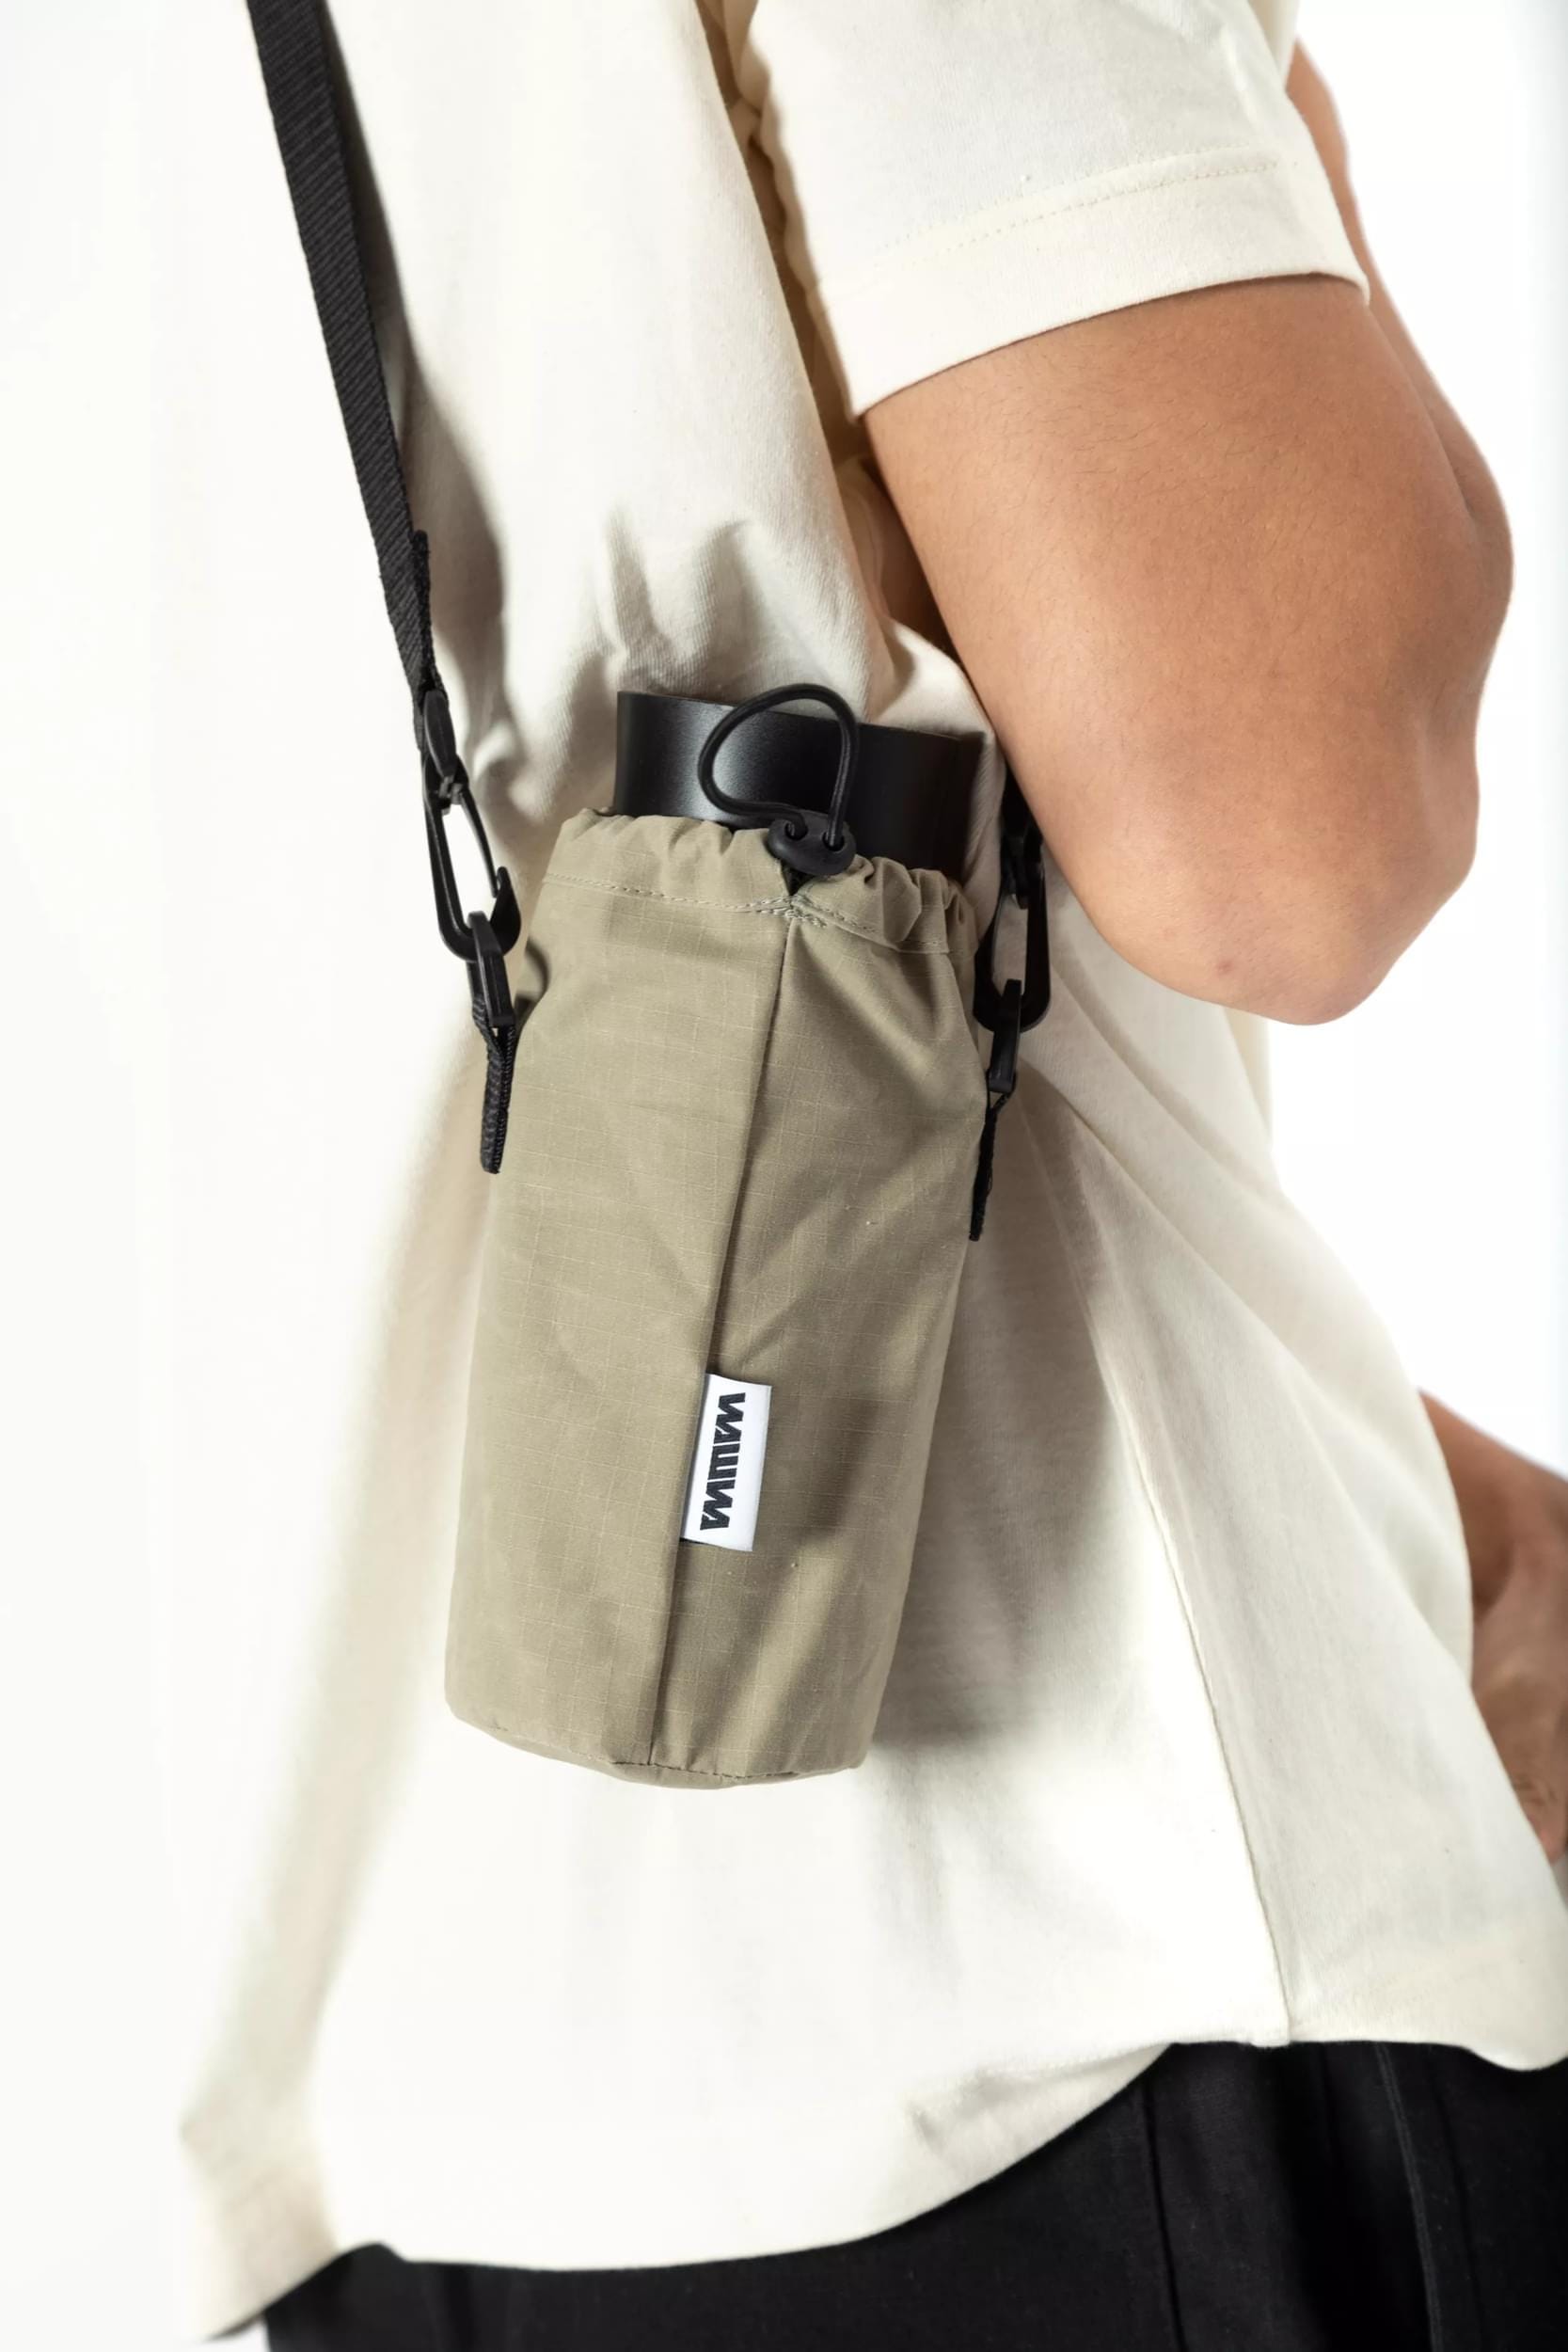 WAC Zipper Fleece Wrist Wallet Pouch Arm Band Bag For MP3 Key Card Storage  Bag Case wangcc